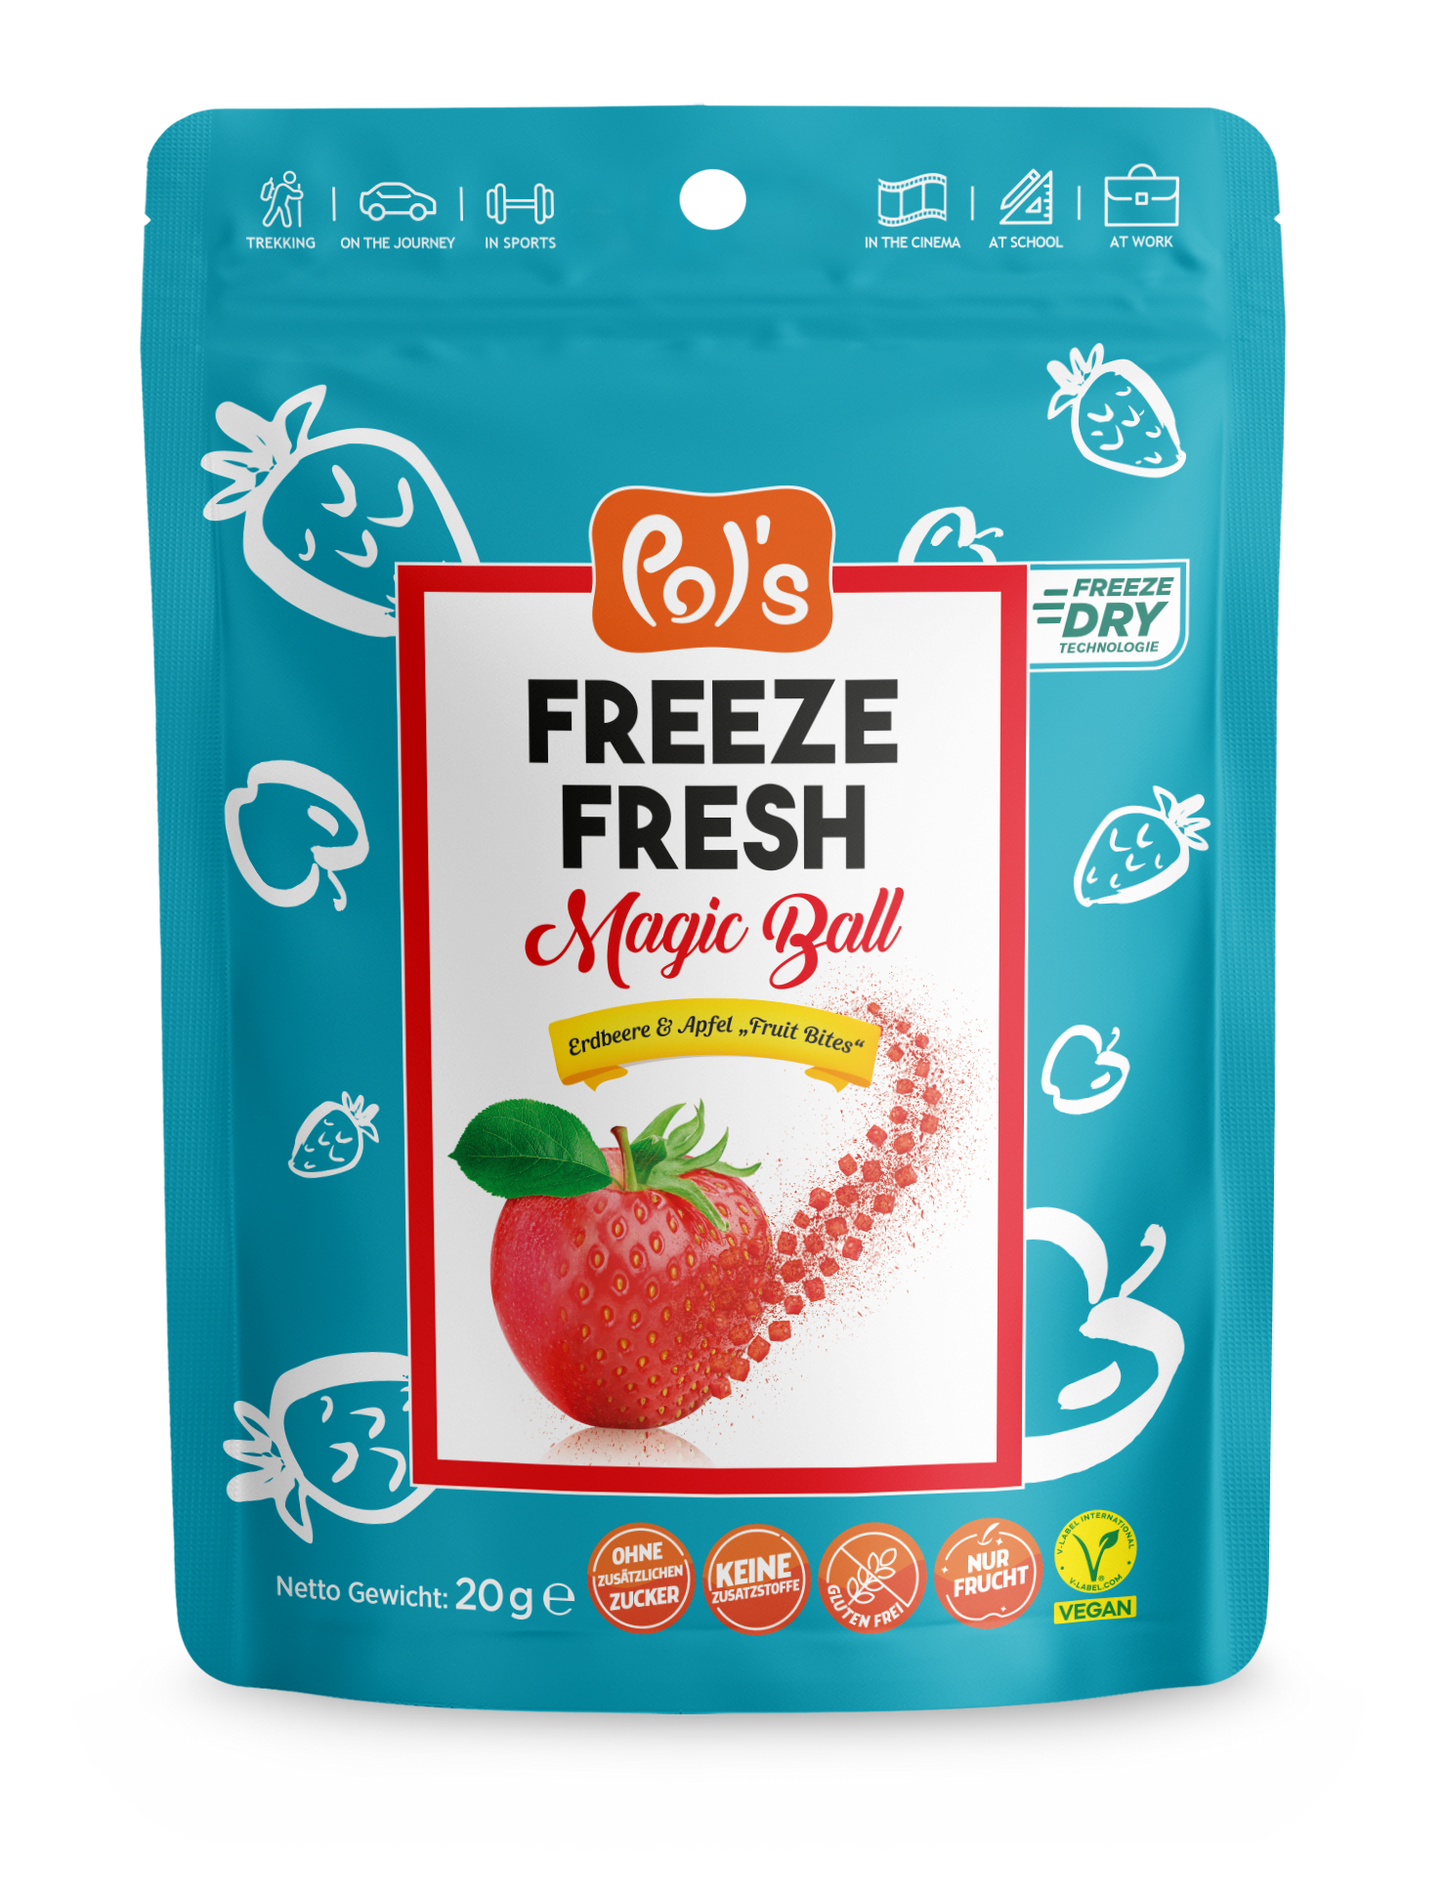 Pol's Freeze Fresh Magic Ball Erdbeere & Apfel 'Fruit Bites'